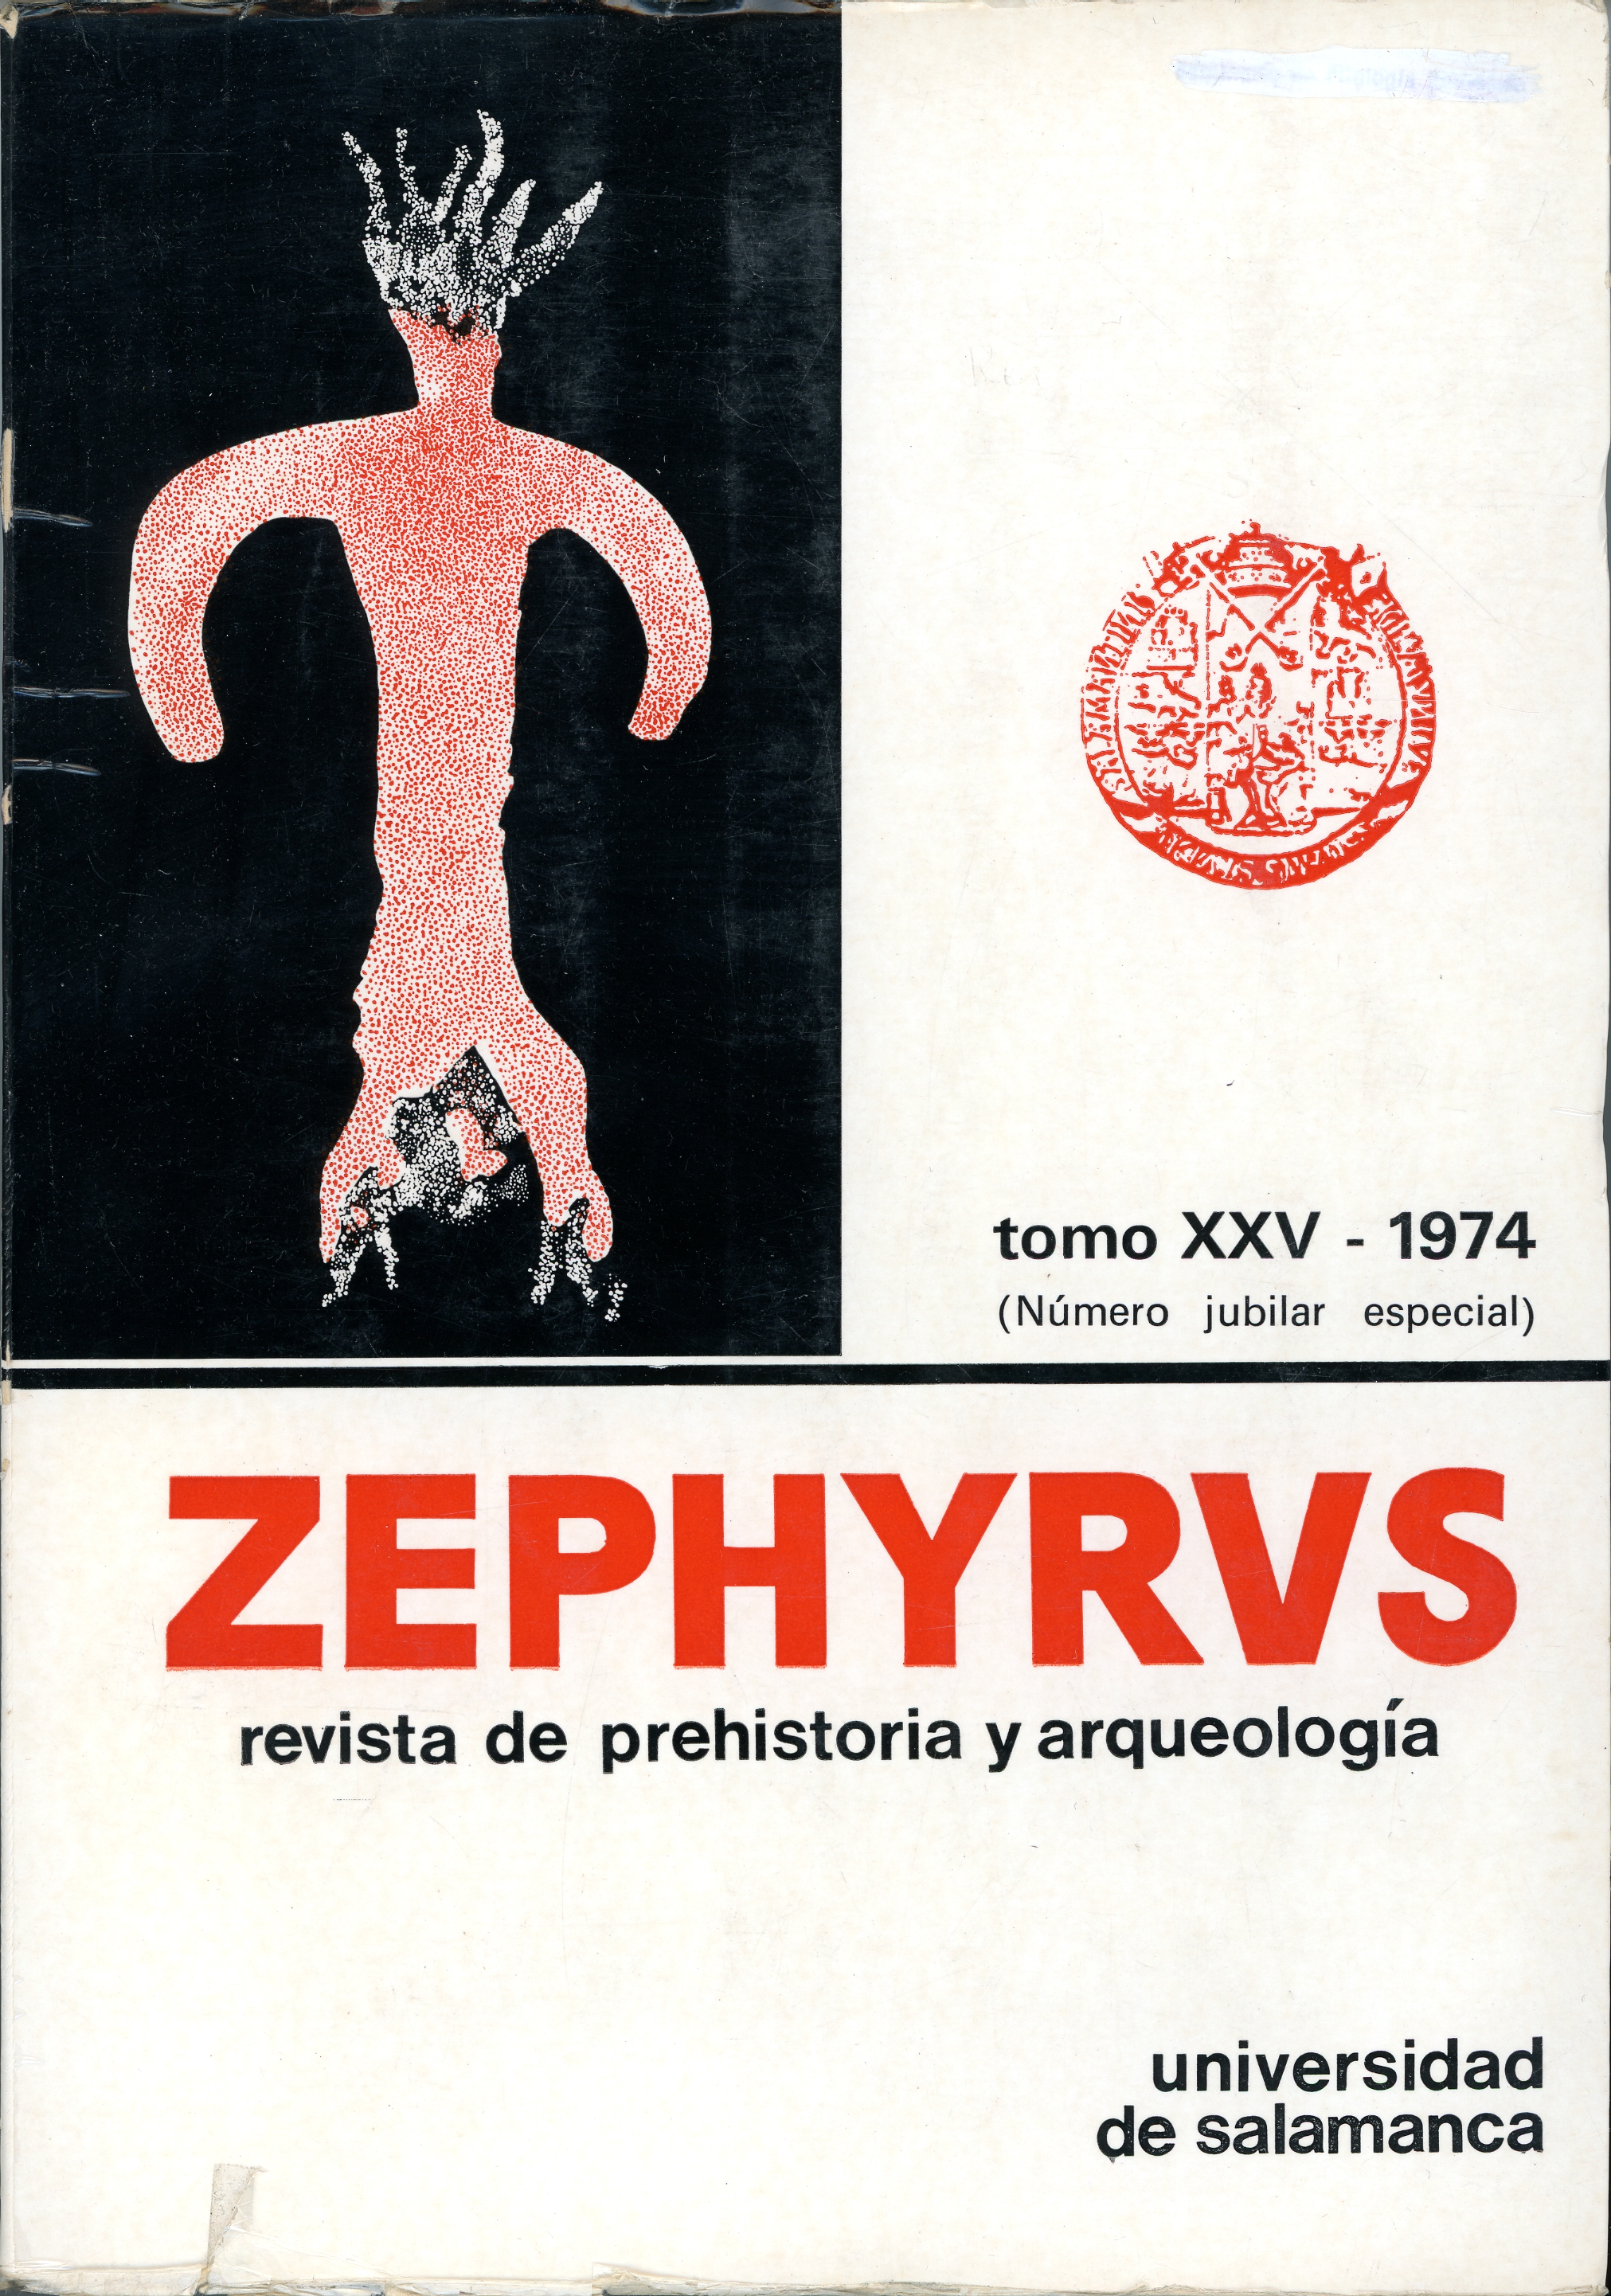                         Ver Vol. 25 (1974)
                    